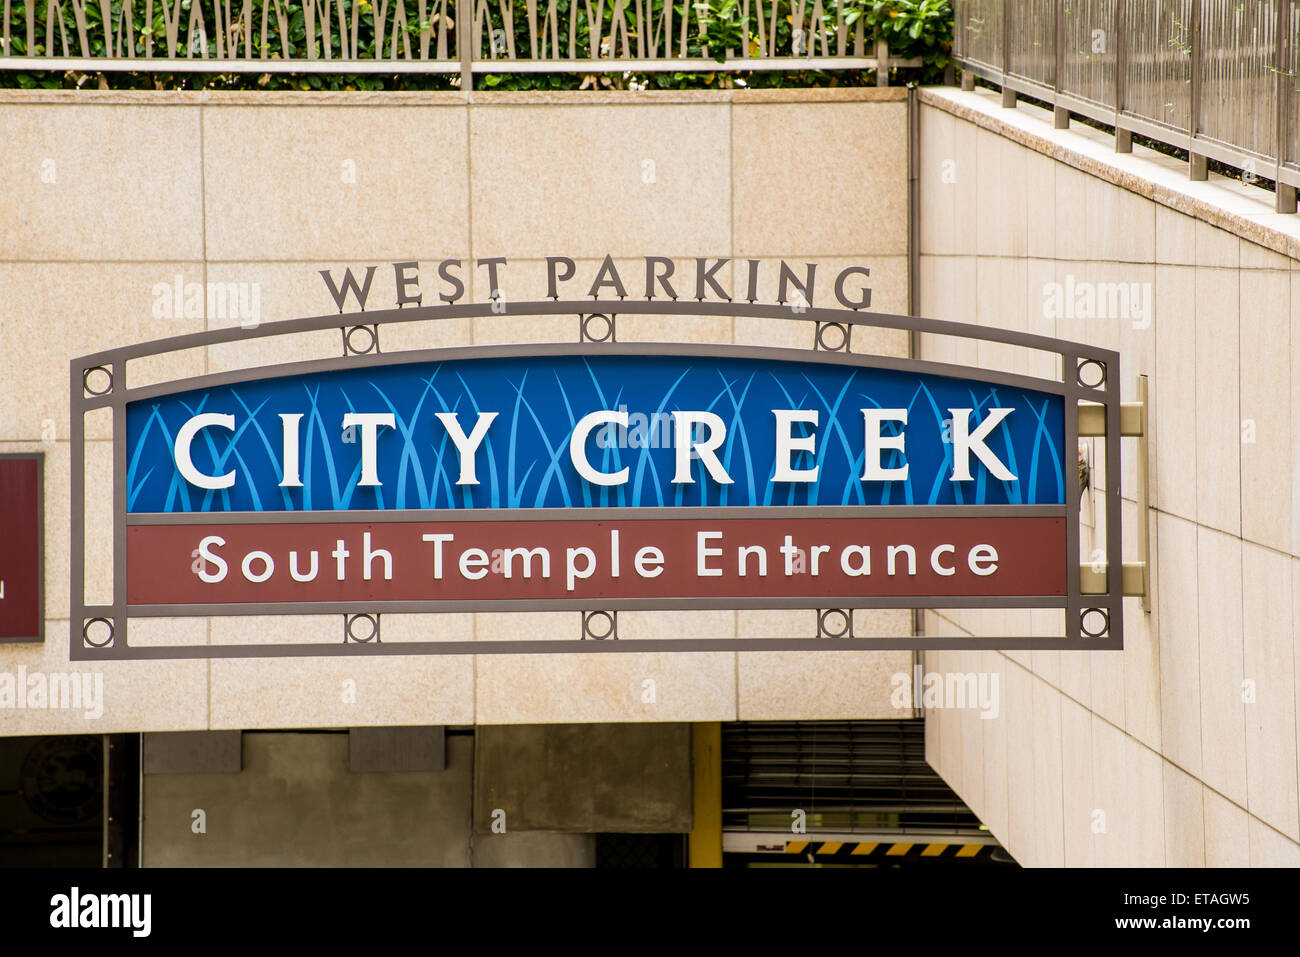 City Creek South Temple Underground Parking Entrance, Salt Lake City, Utah  Stock Photo - Alamy